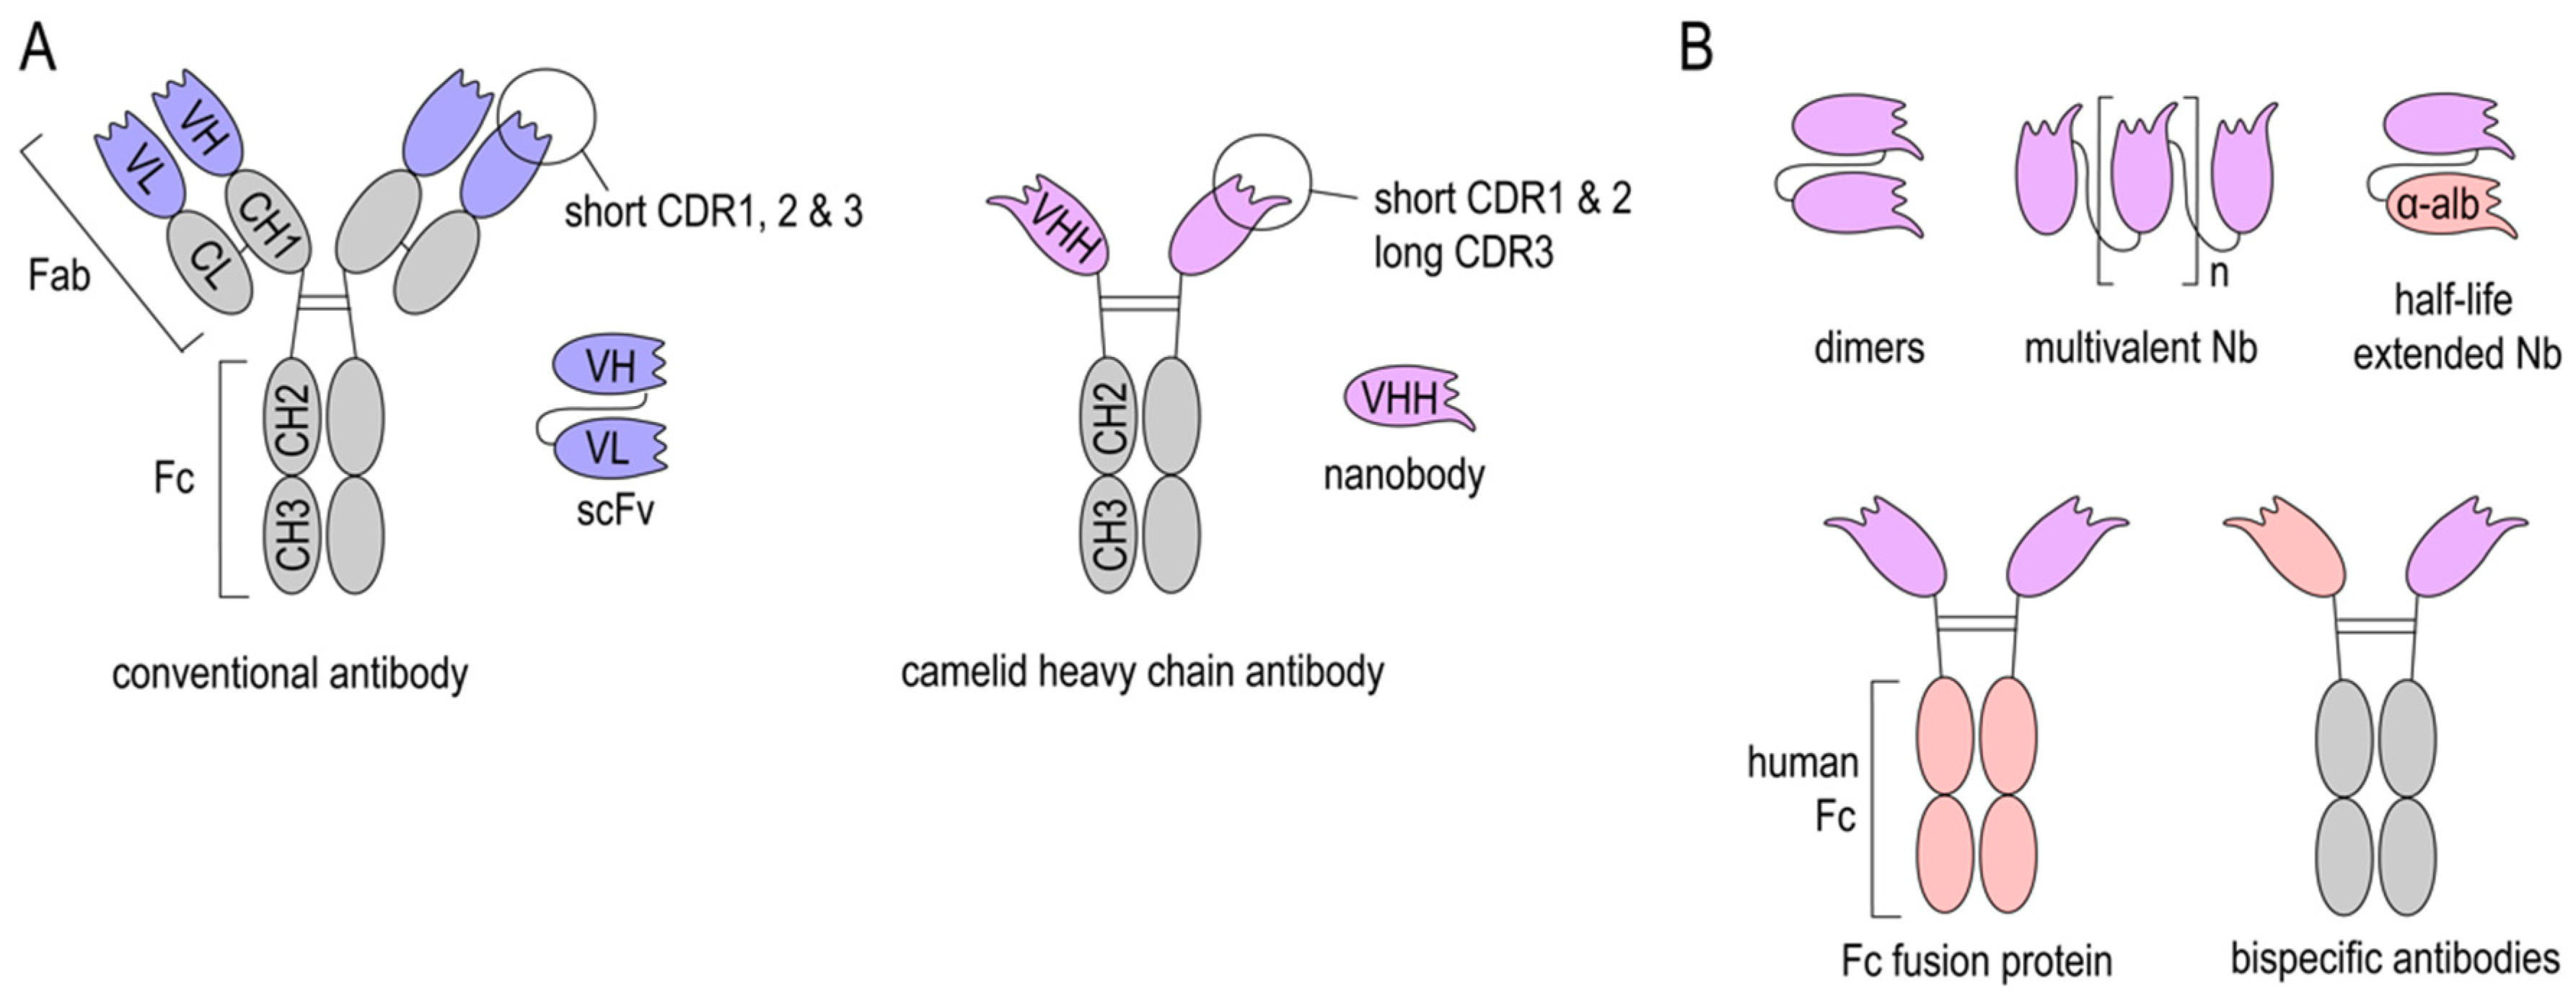 Heavy Chain antibody. Single-domain antibody. SCFV антитела. Cdr antibody. Домены антител